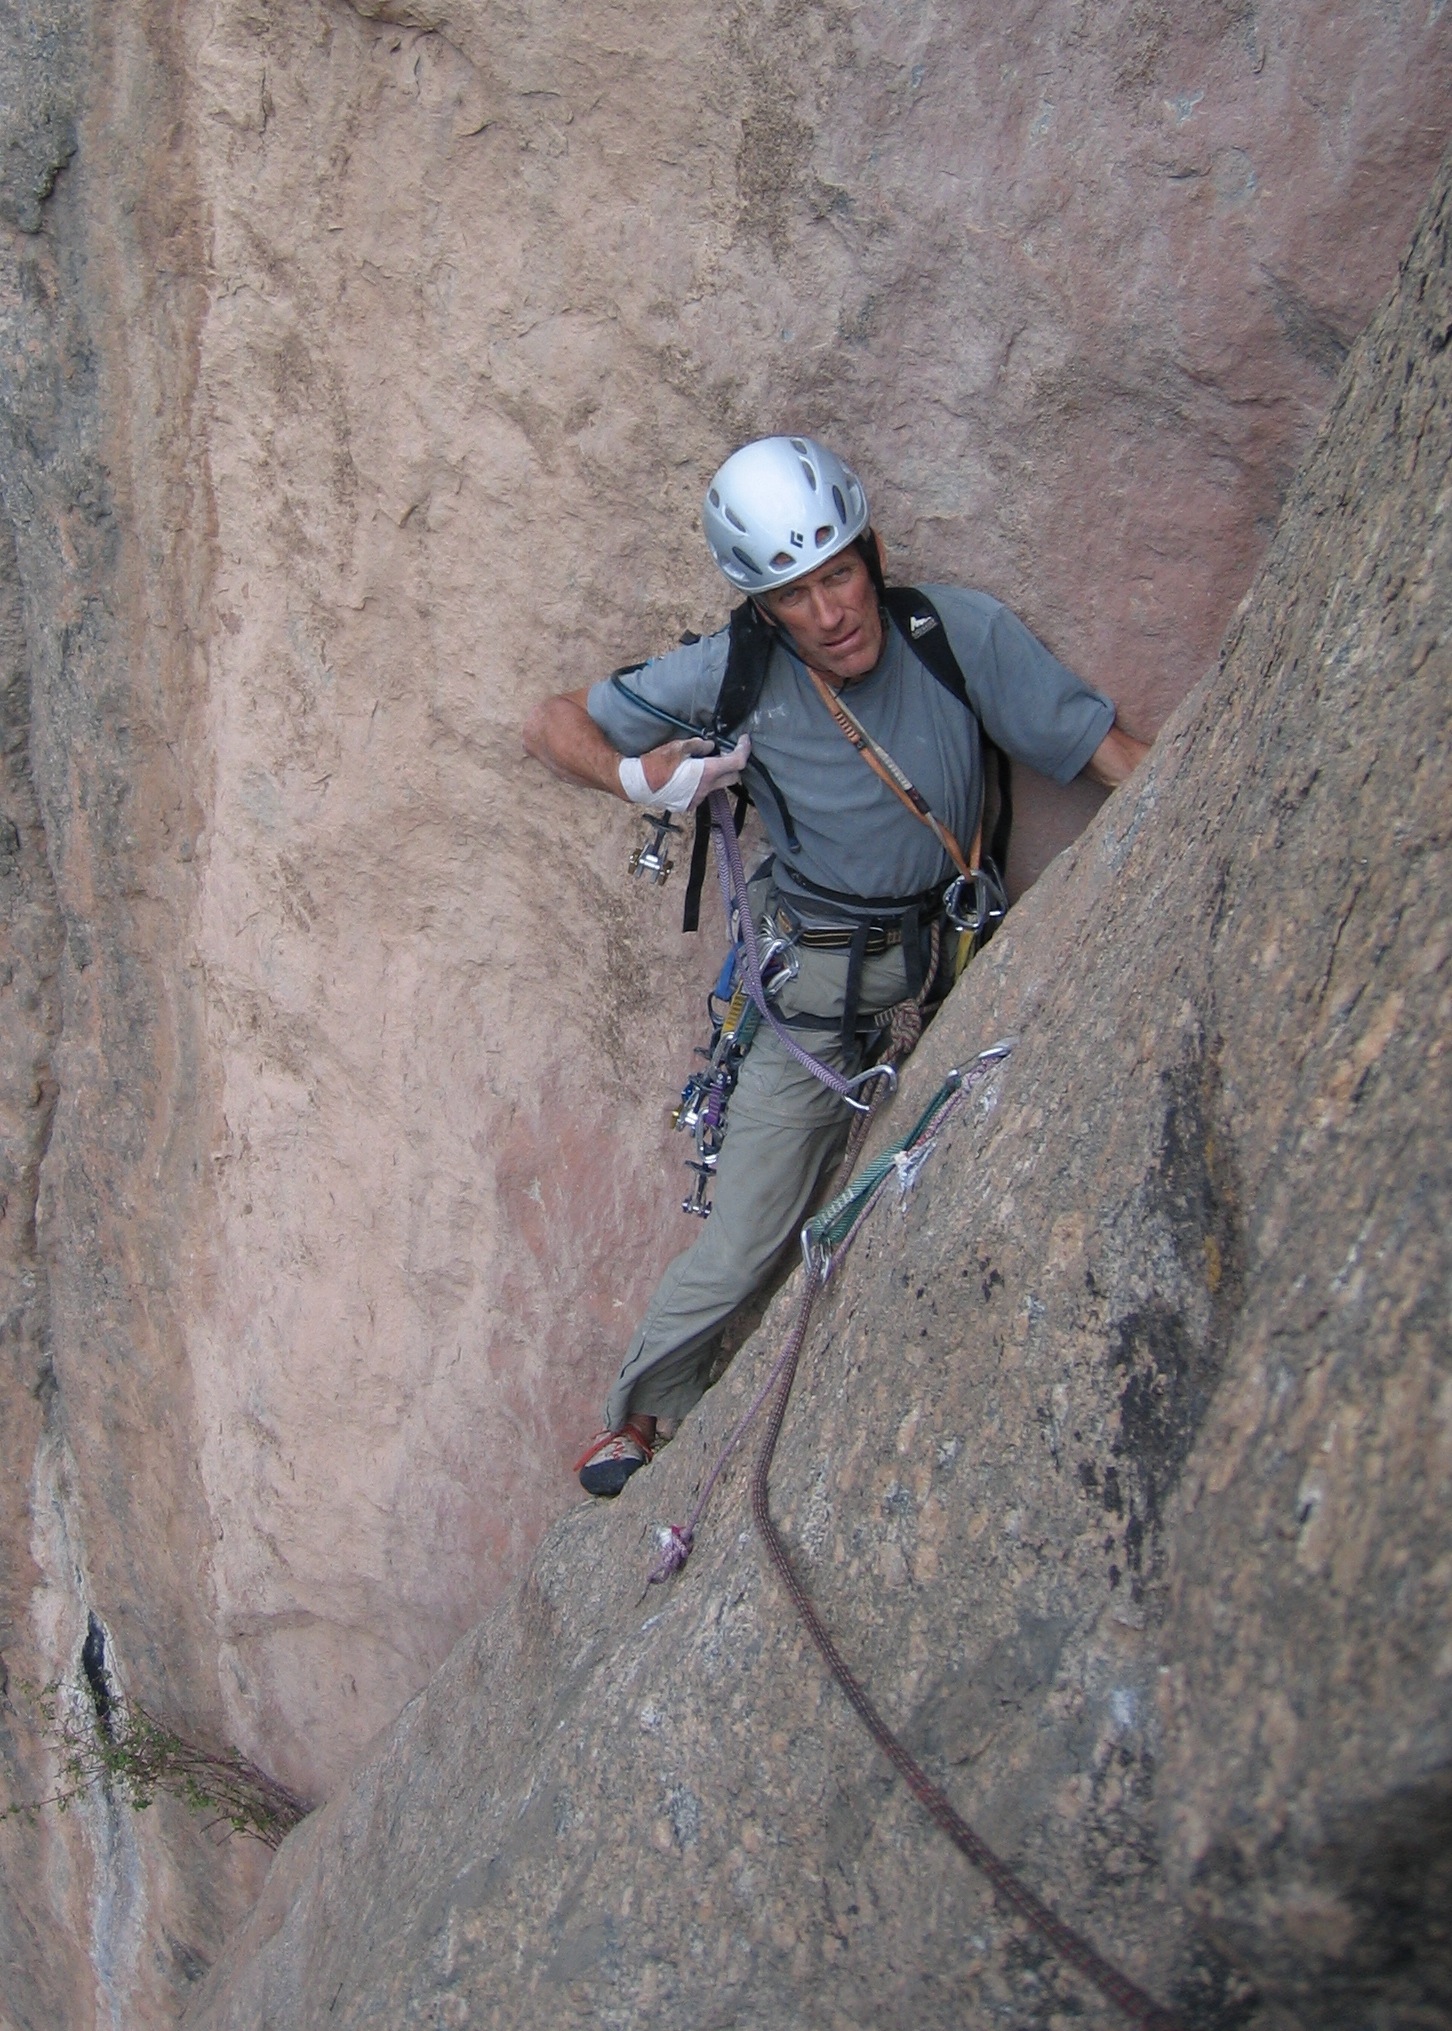  Джим Донини (Jim Donini) в 2006 году на маршруте в Black Canyon, Колорадо